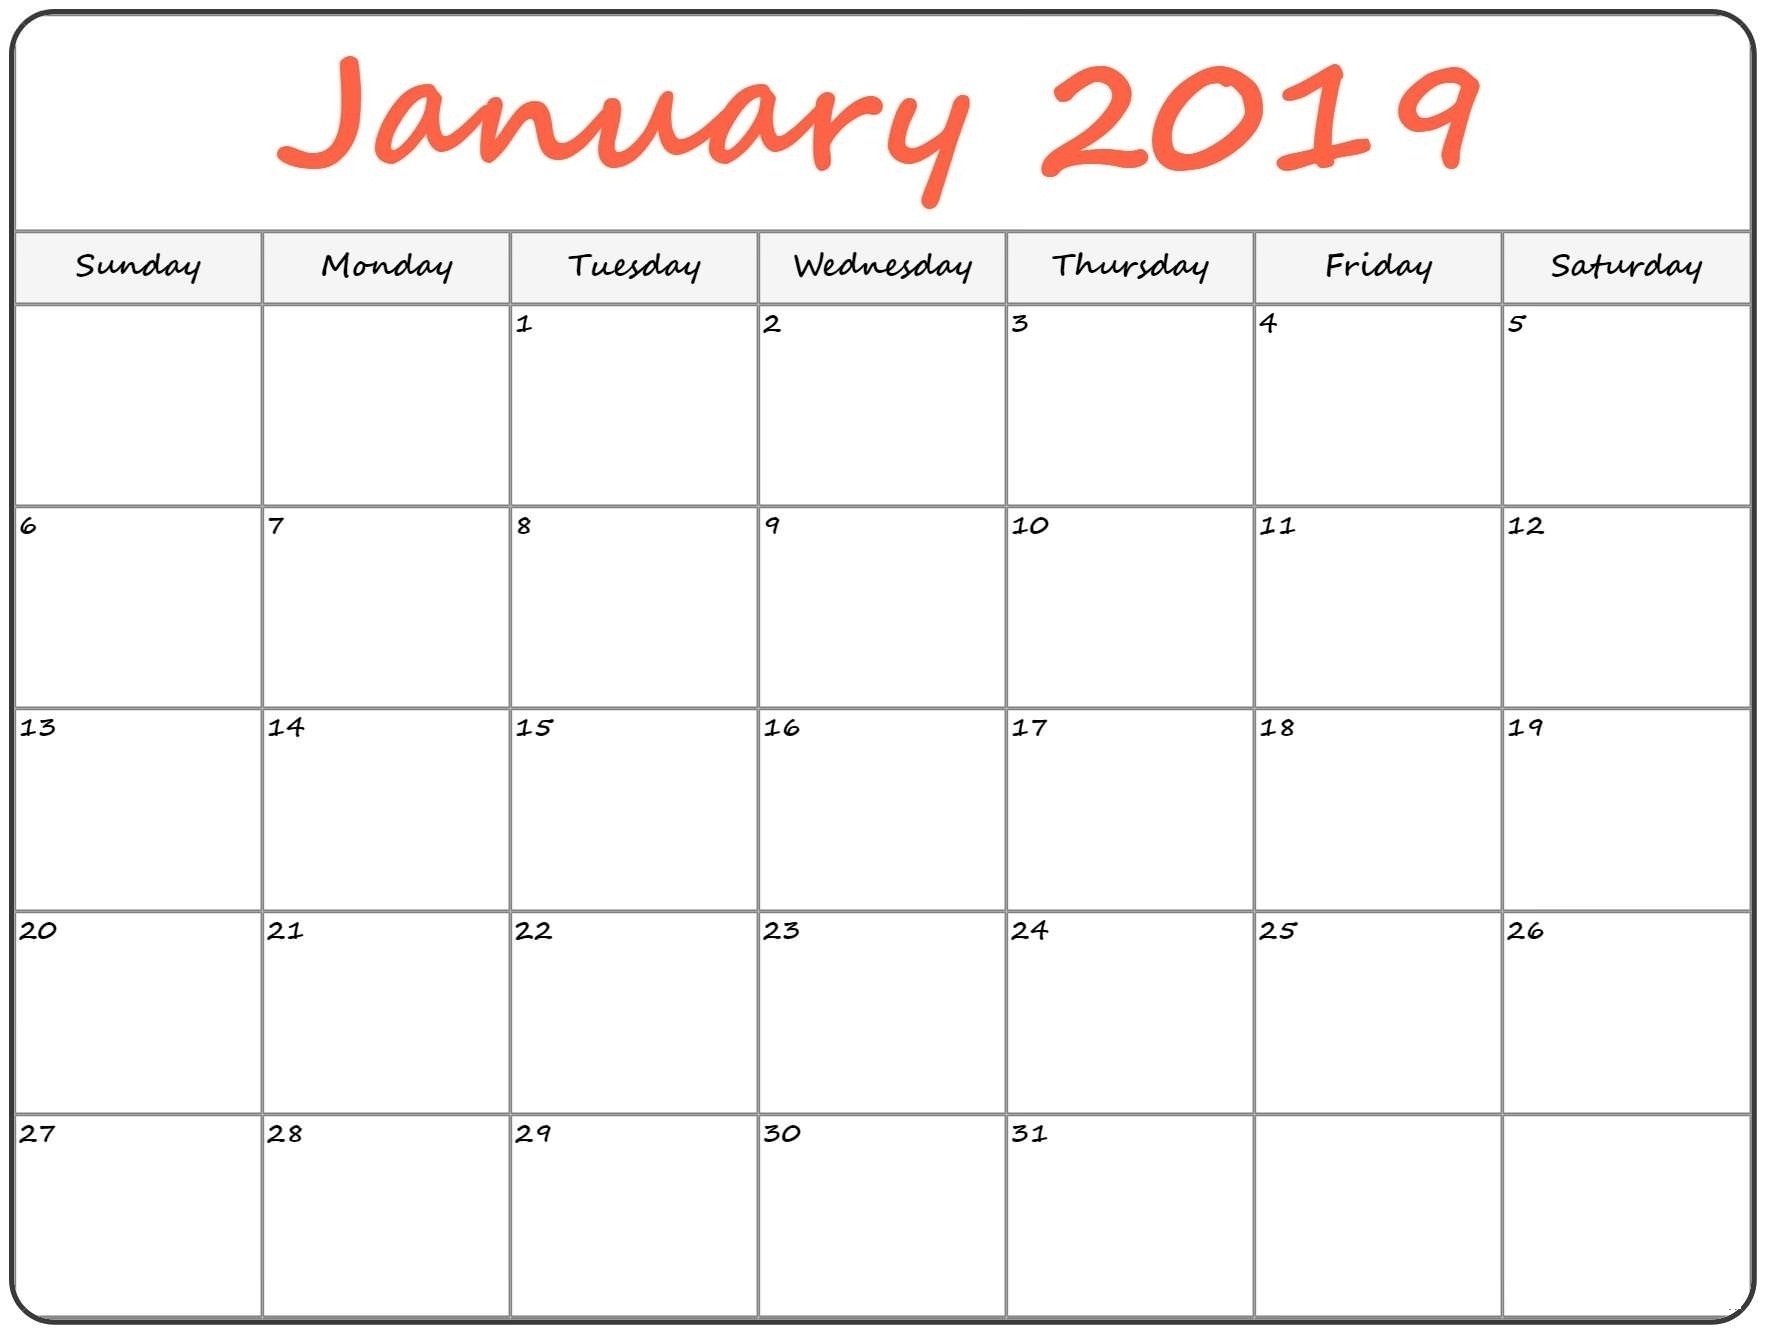 bangalore press calendar 2014 holiday list pdf